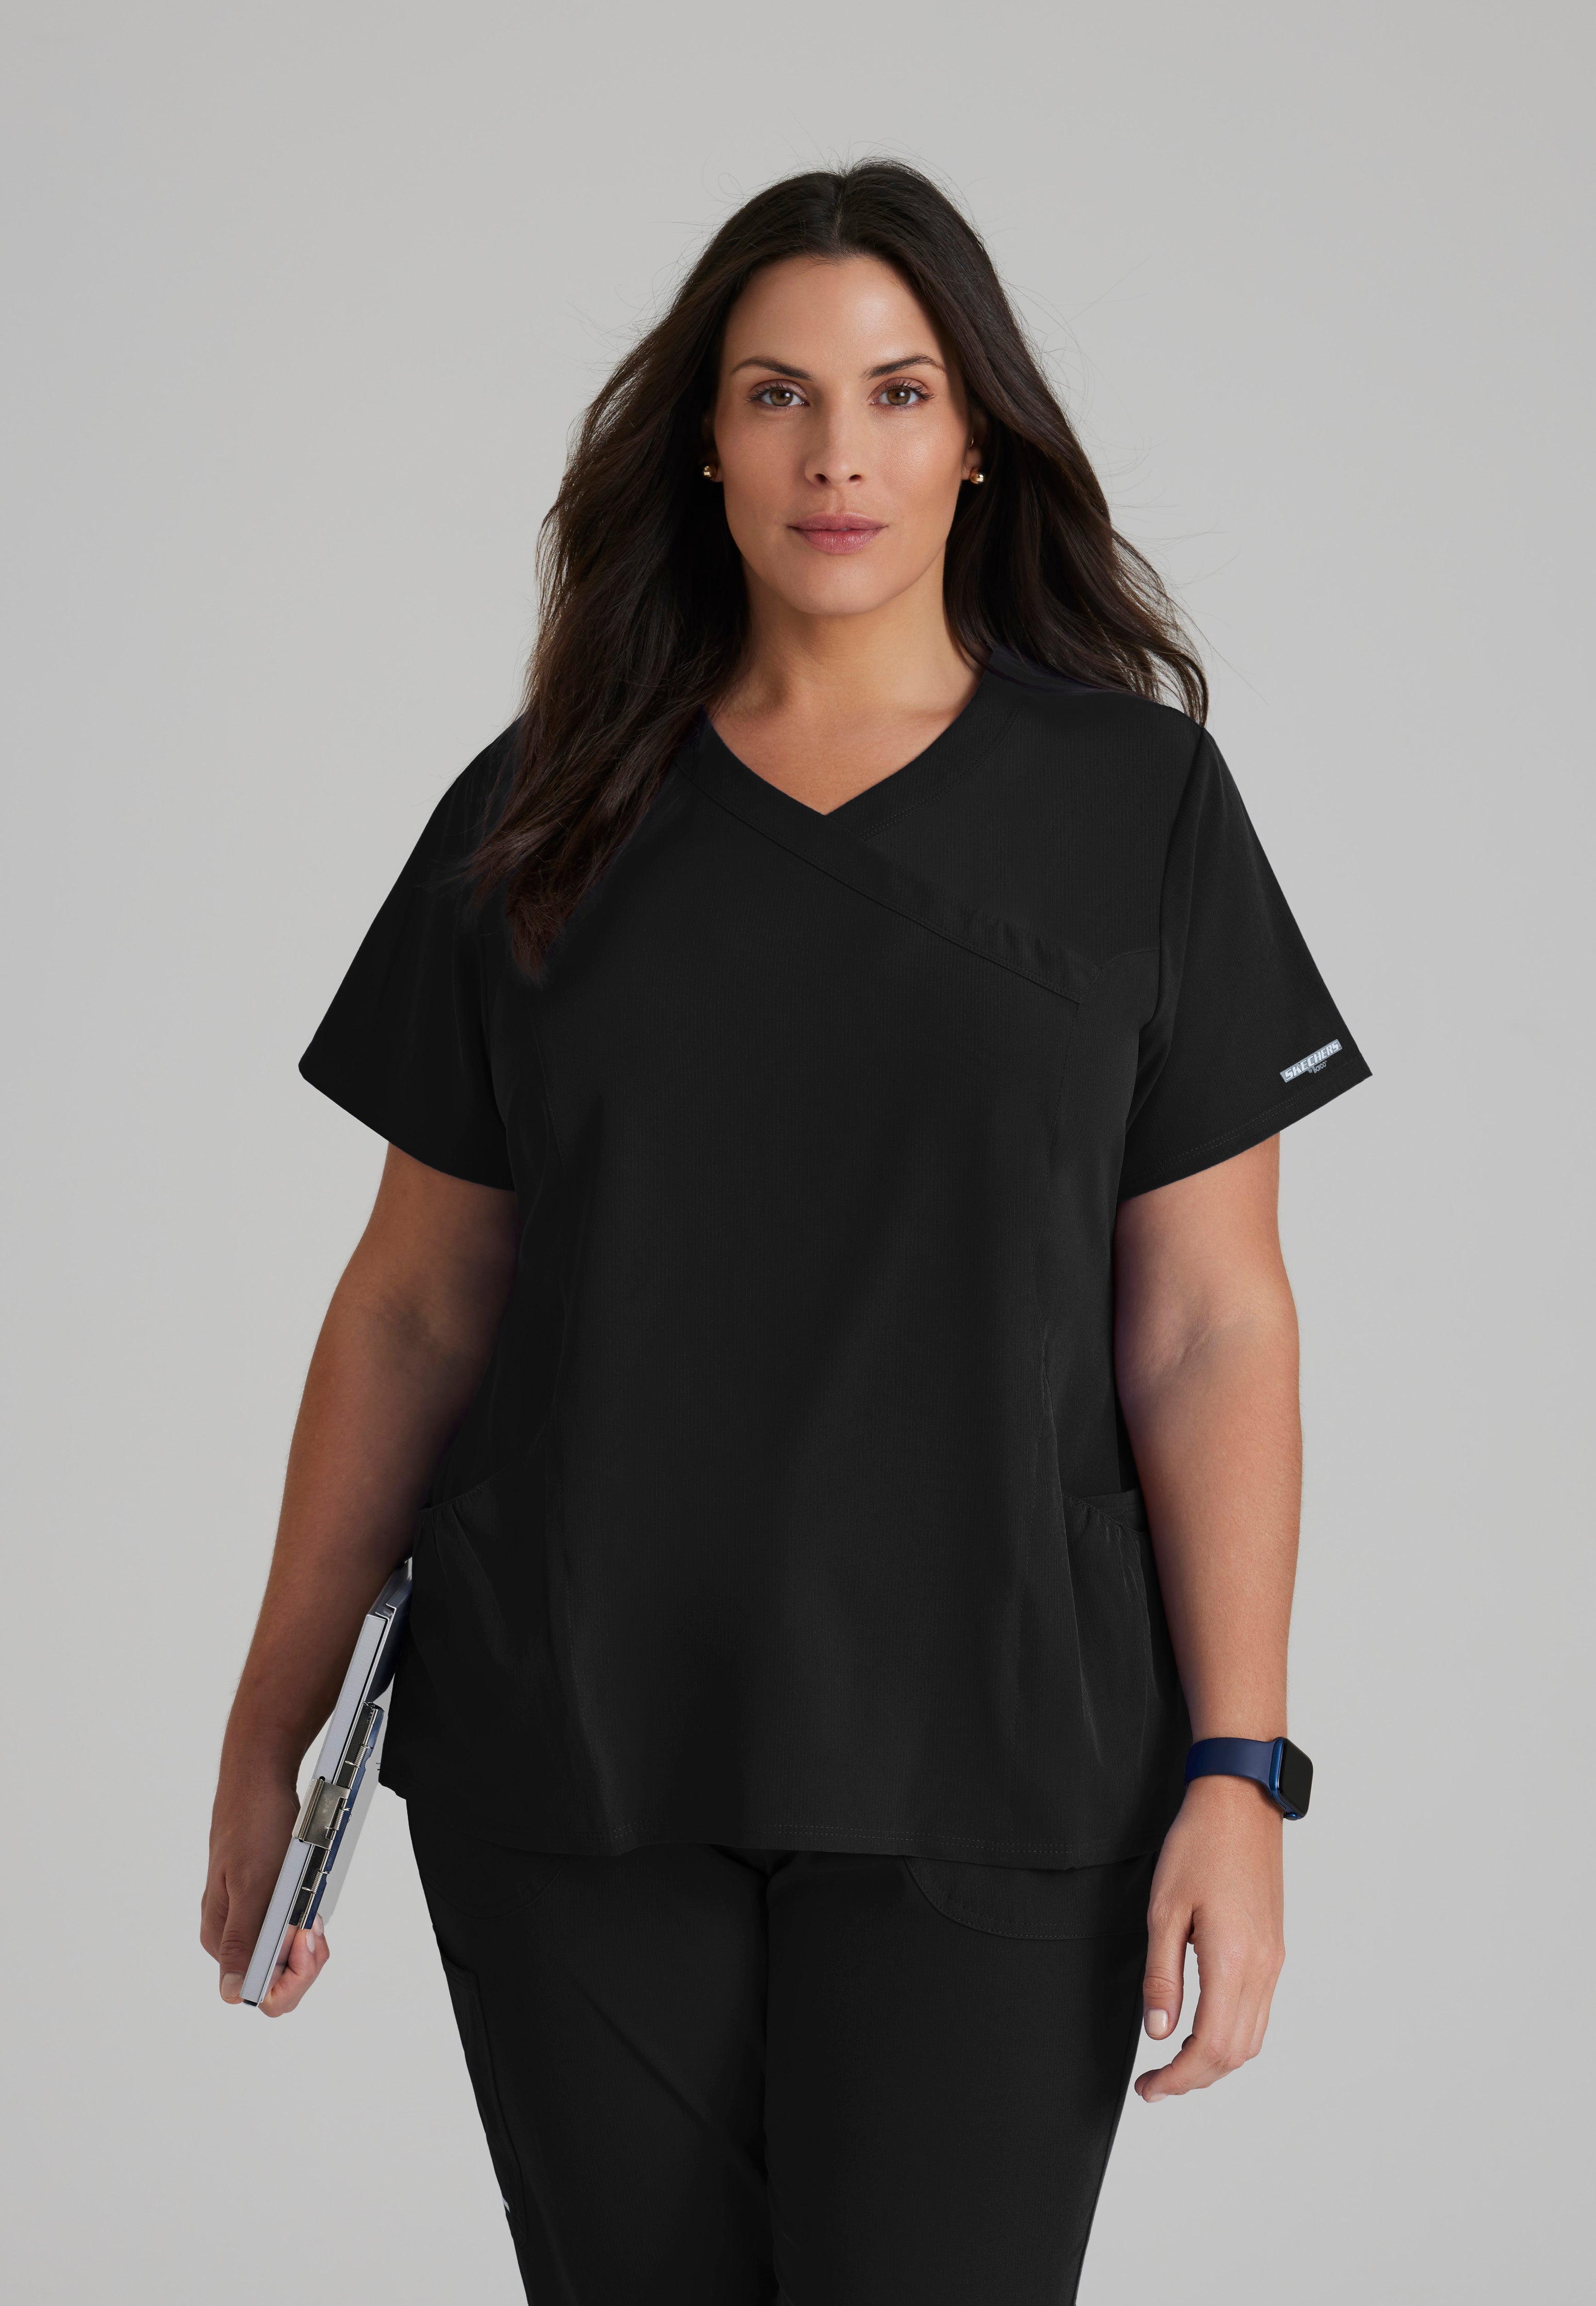 Barco Uniforms: Skechers by Barco Women's 3-Pocket Vitality V-neck Scrub  Top, Discount Barco Nursing Scrubs and Medical Uniforms, Discounts on  Barco Scrubs